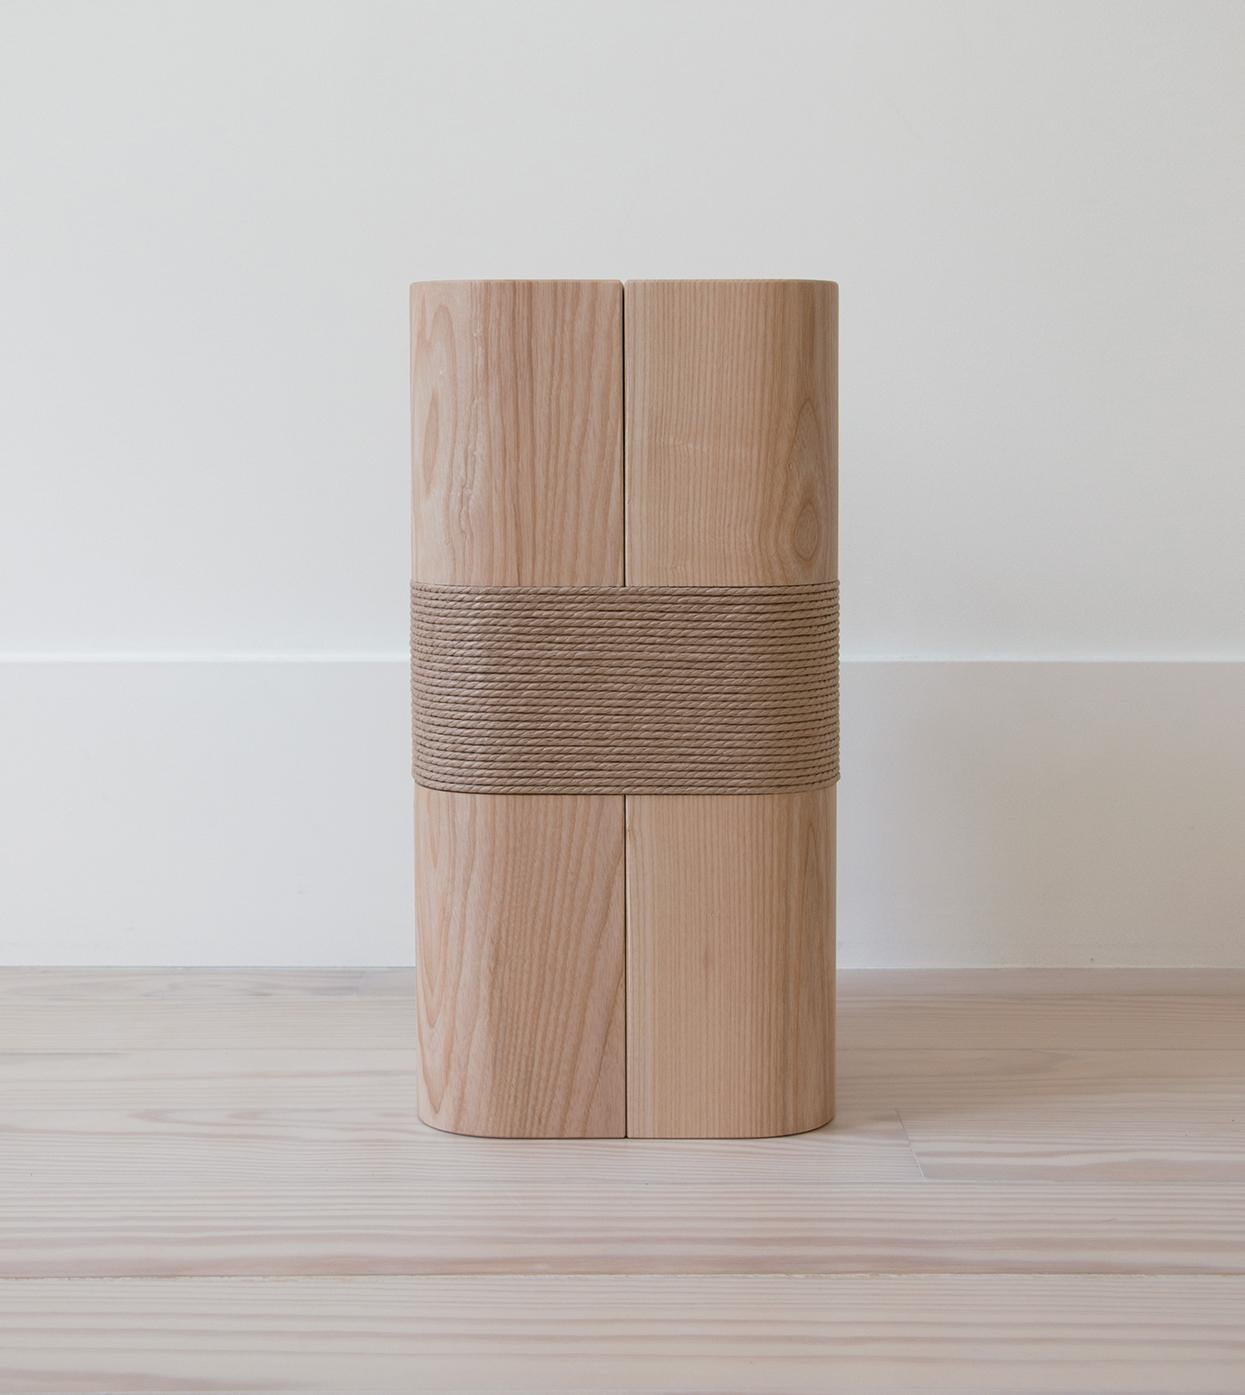 plinth of wood